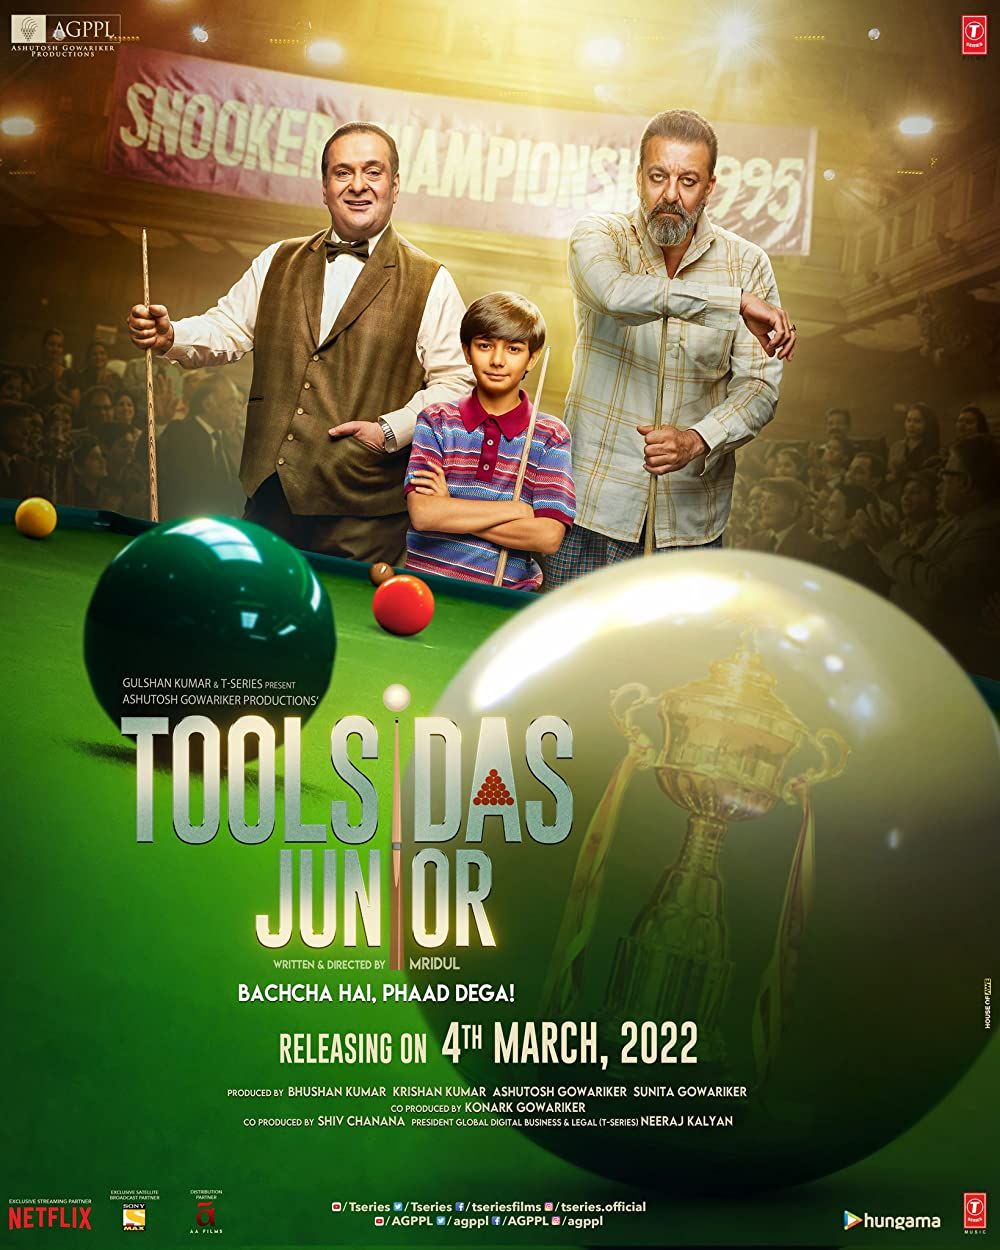 Toolsidas Junior (2022) Hindi HDRip download full movie